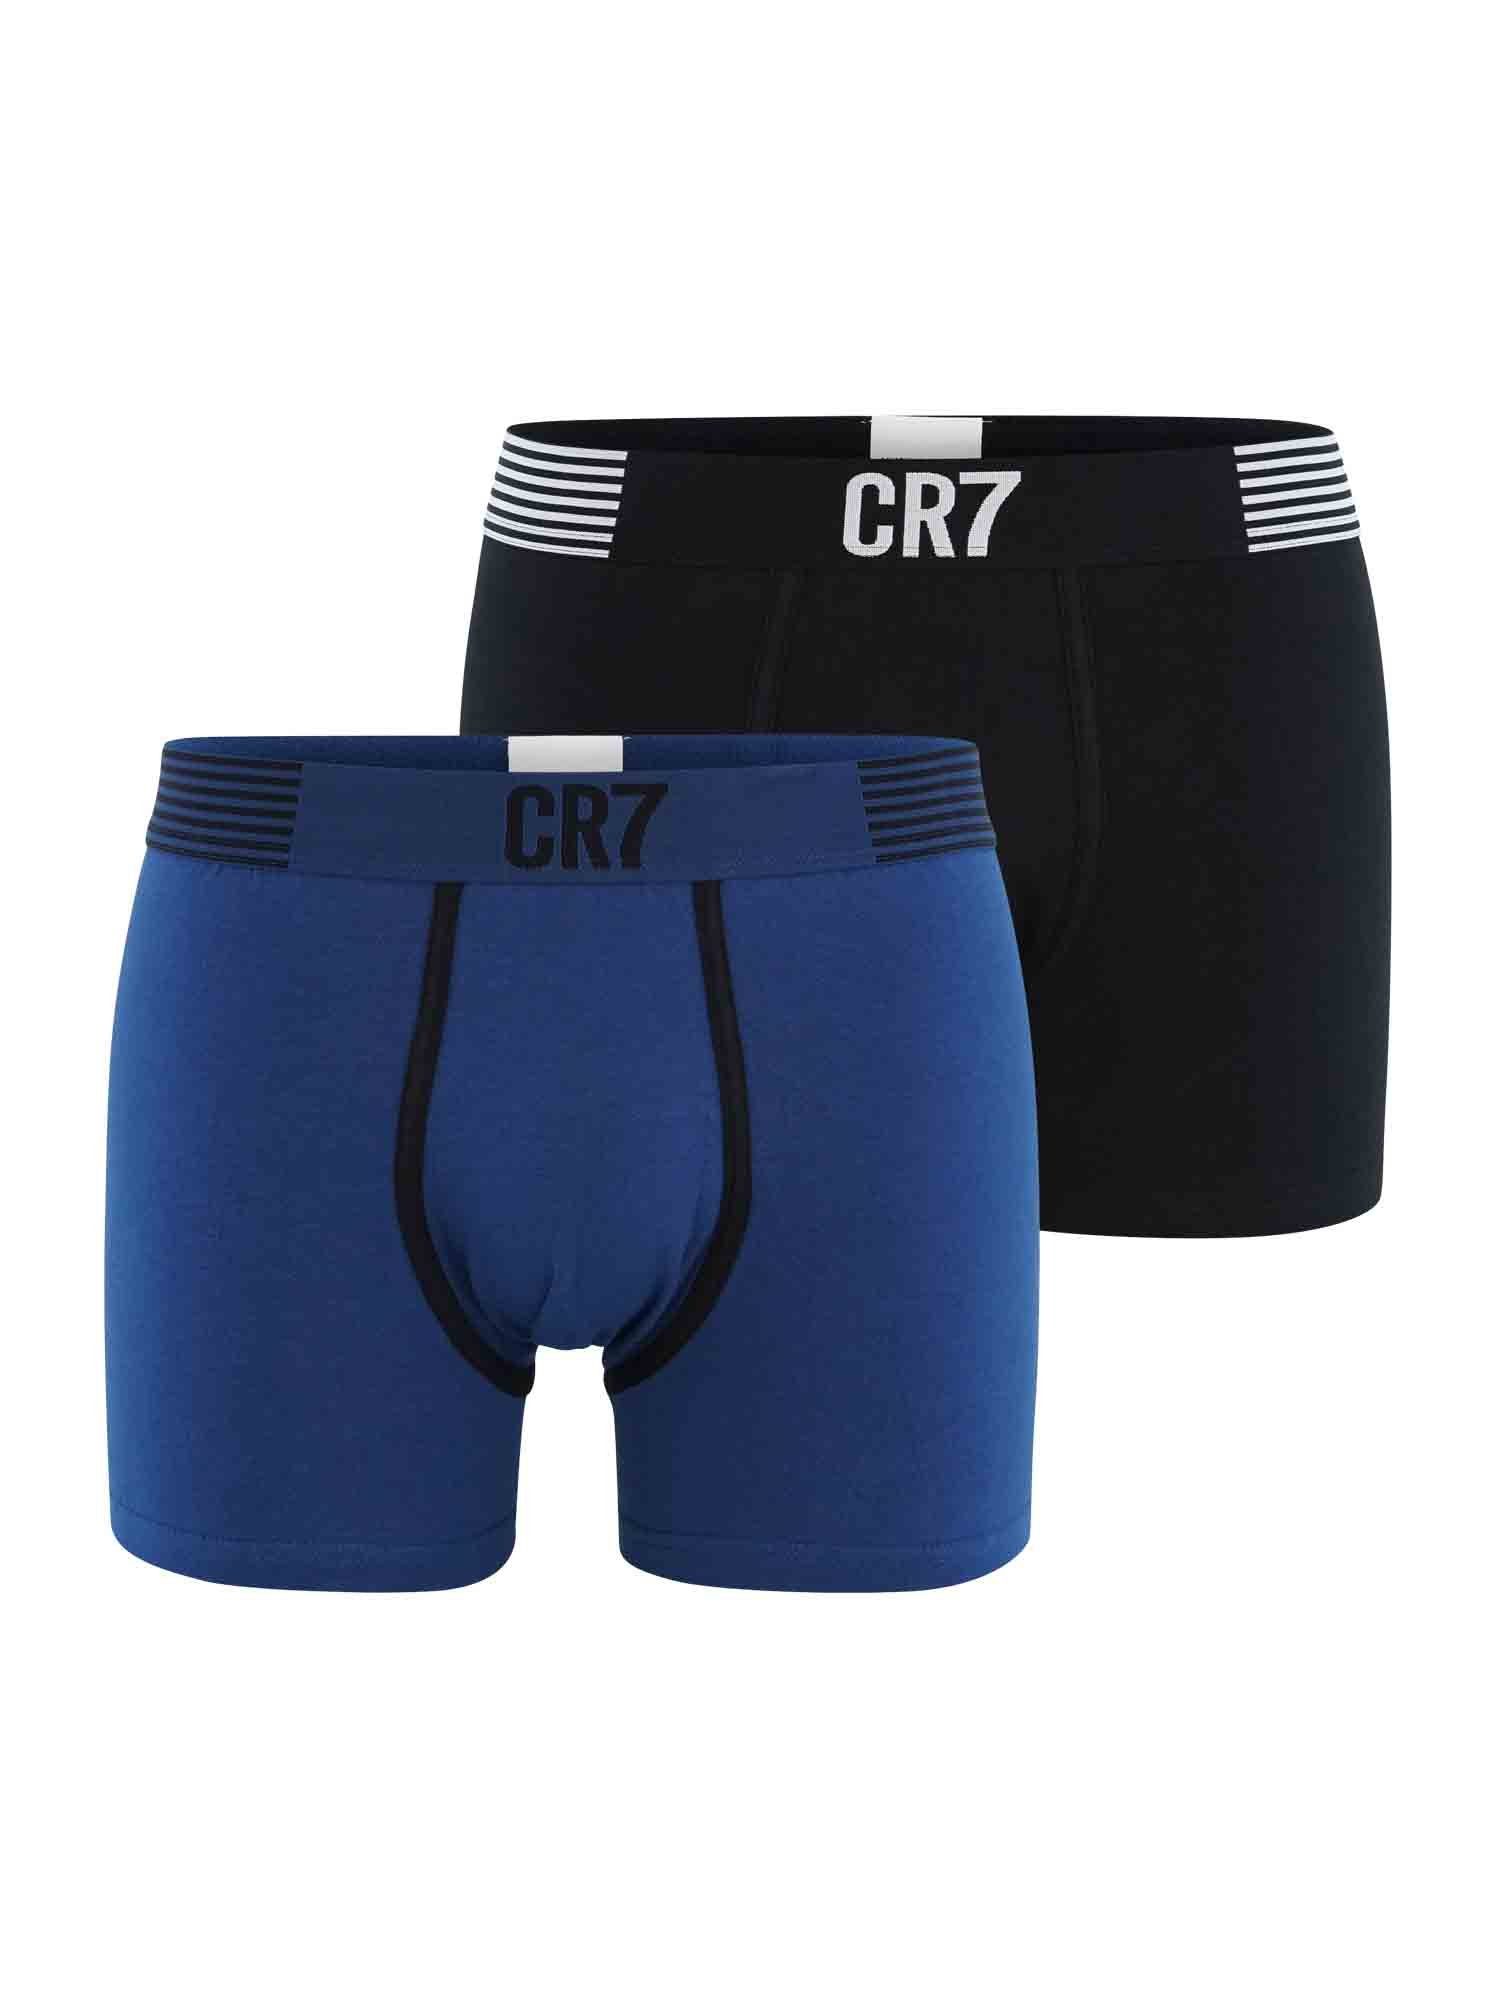 CR7 Retro Pants Herren Männer Boxershorts Retro Pants Trunks Multipack (2-St) Multi 5